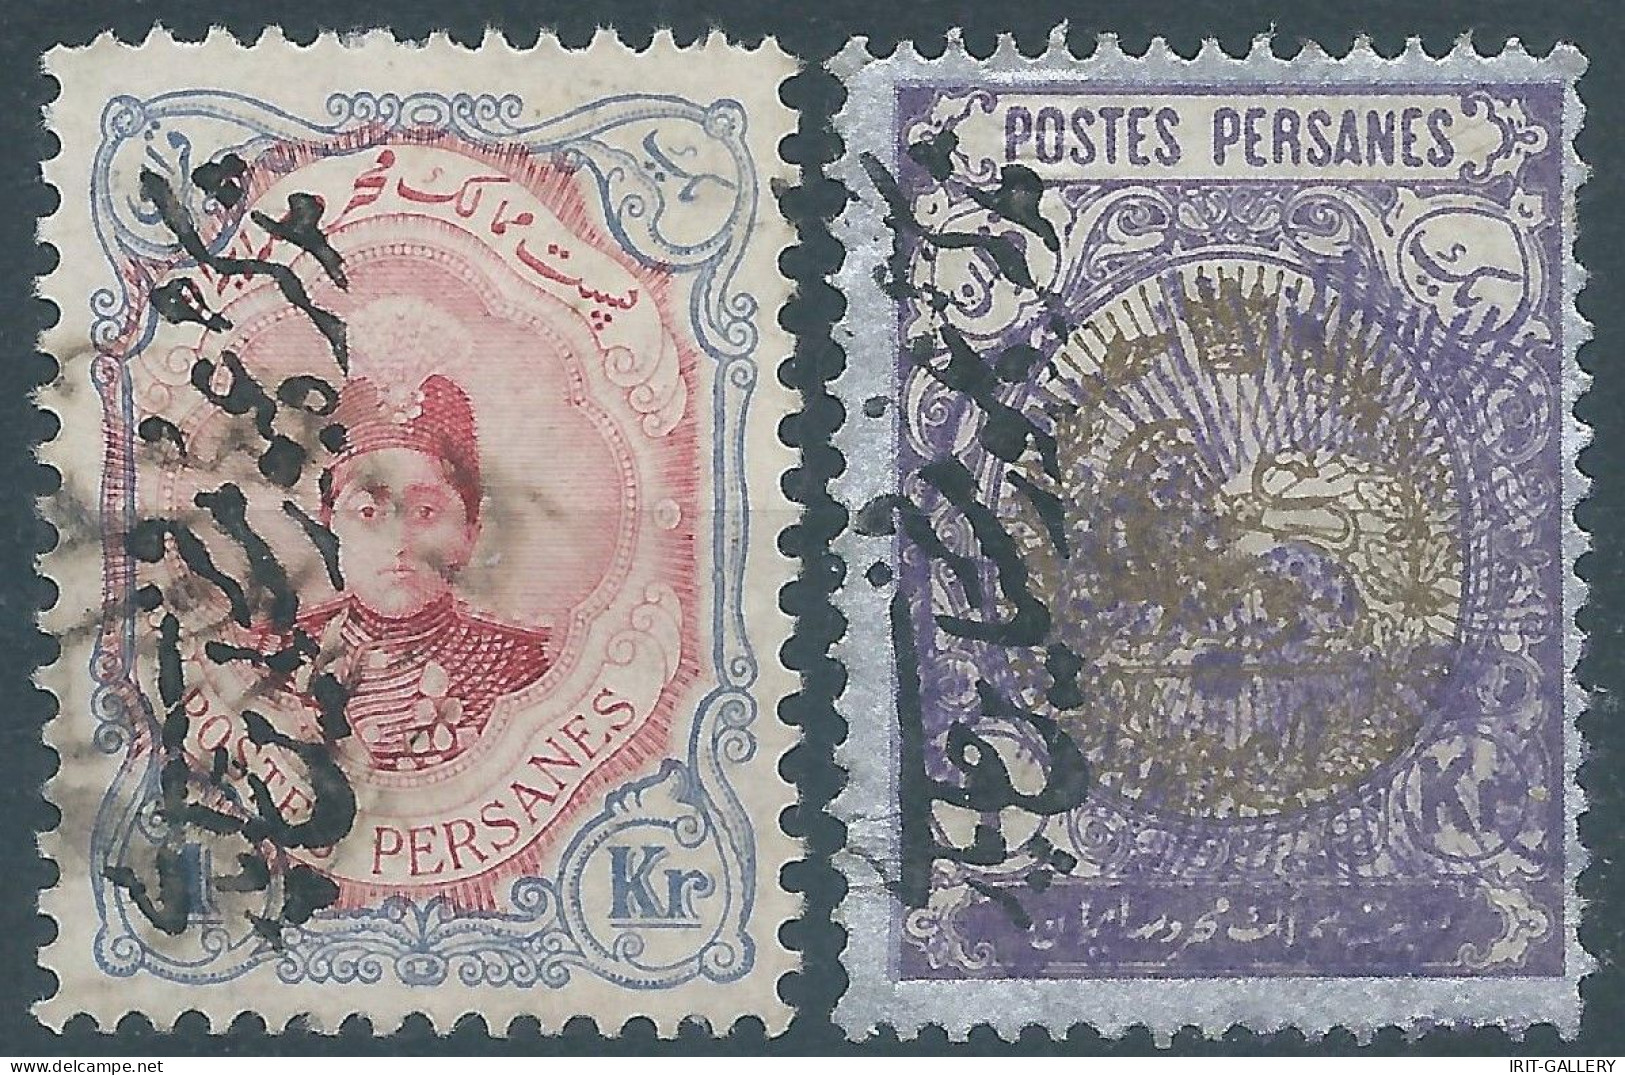 PERSIA PERSE IRAN,Qajar Revenue(Overprinted Tazkereh Oboore Mosaferine Chapari,Traveler's Passage Fees)on 1Kr And 1Kr - Iran